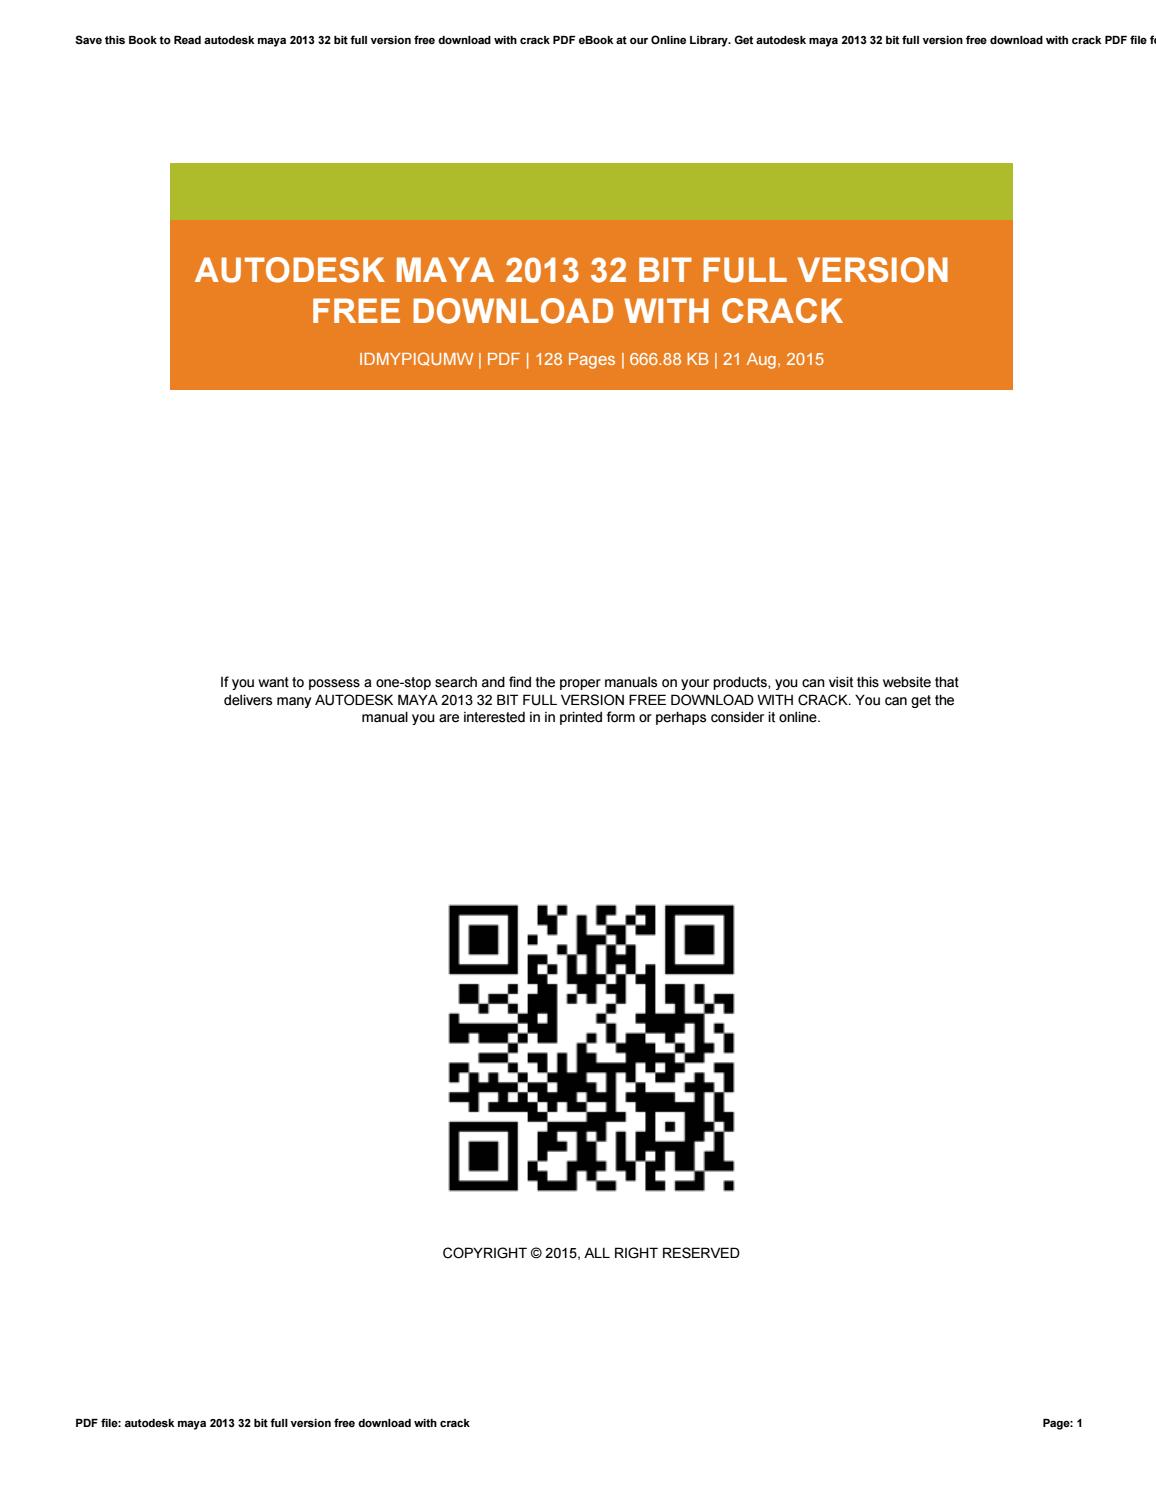 maya 2013 for mac